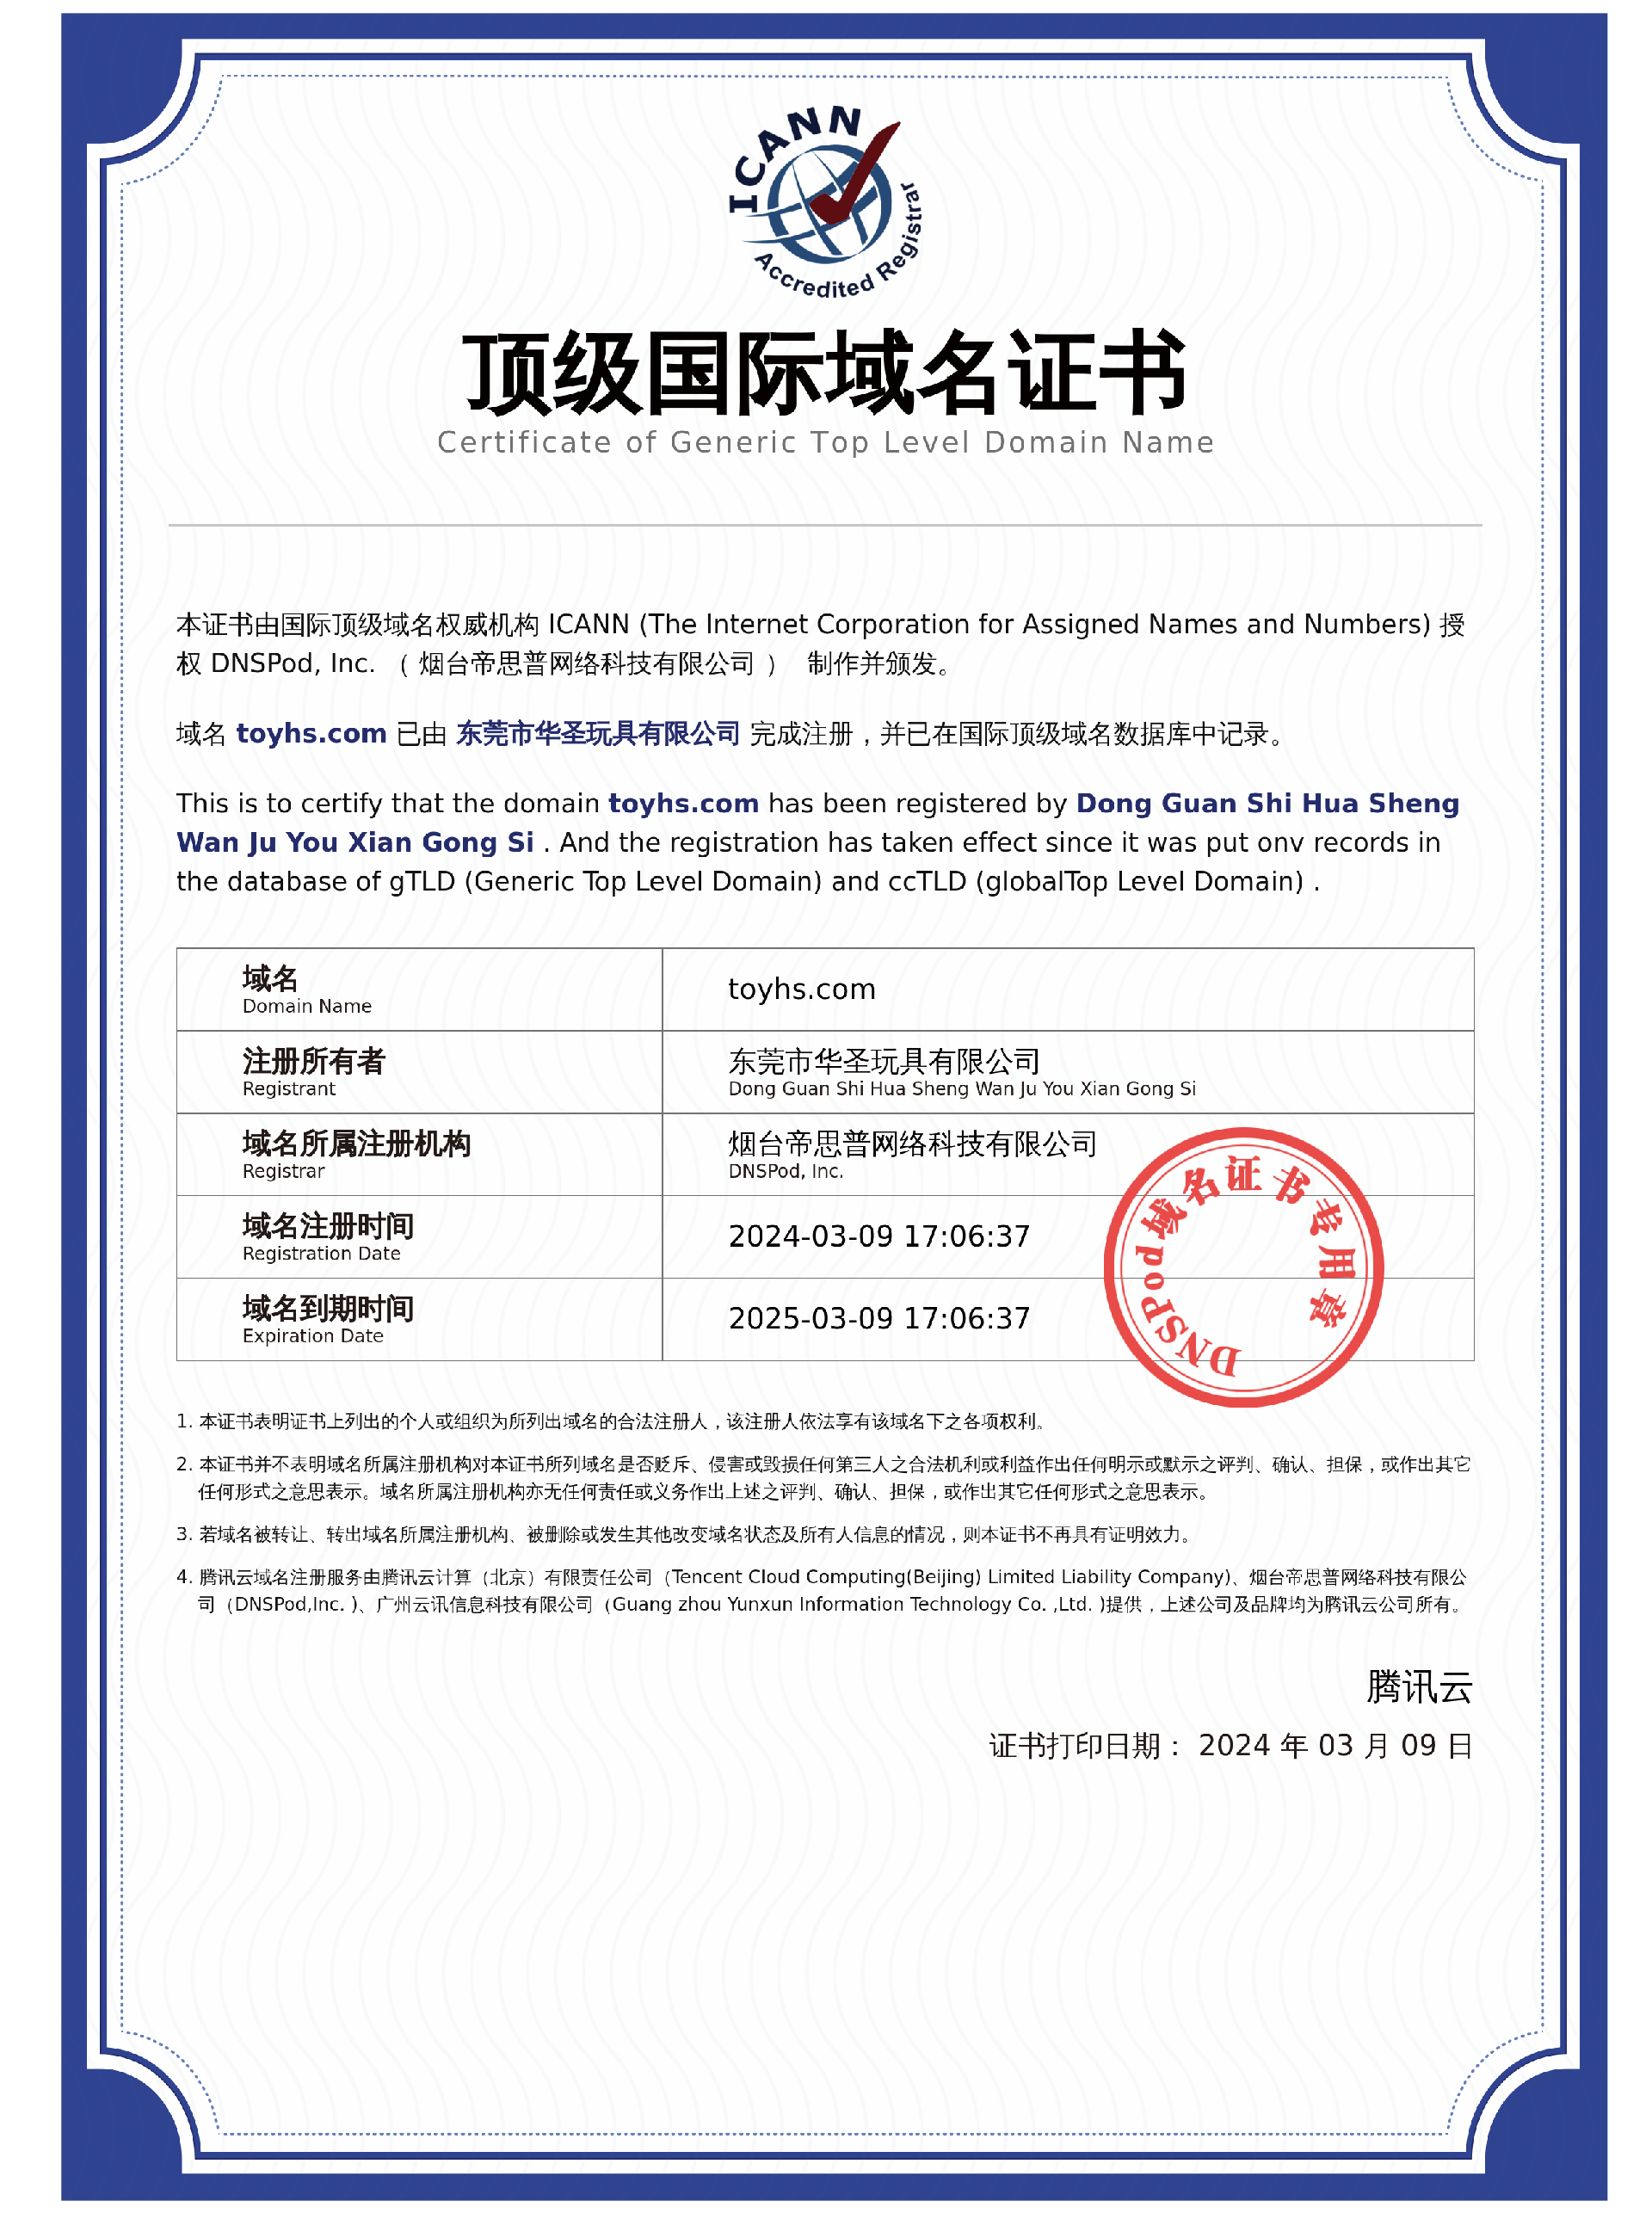 toyhs.com.certificate.jpg